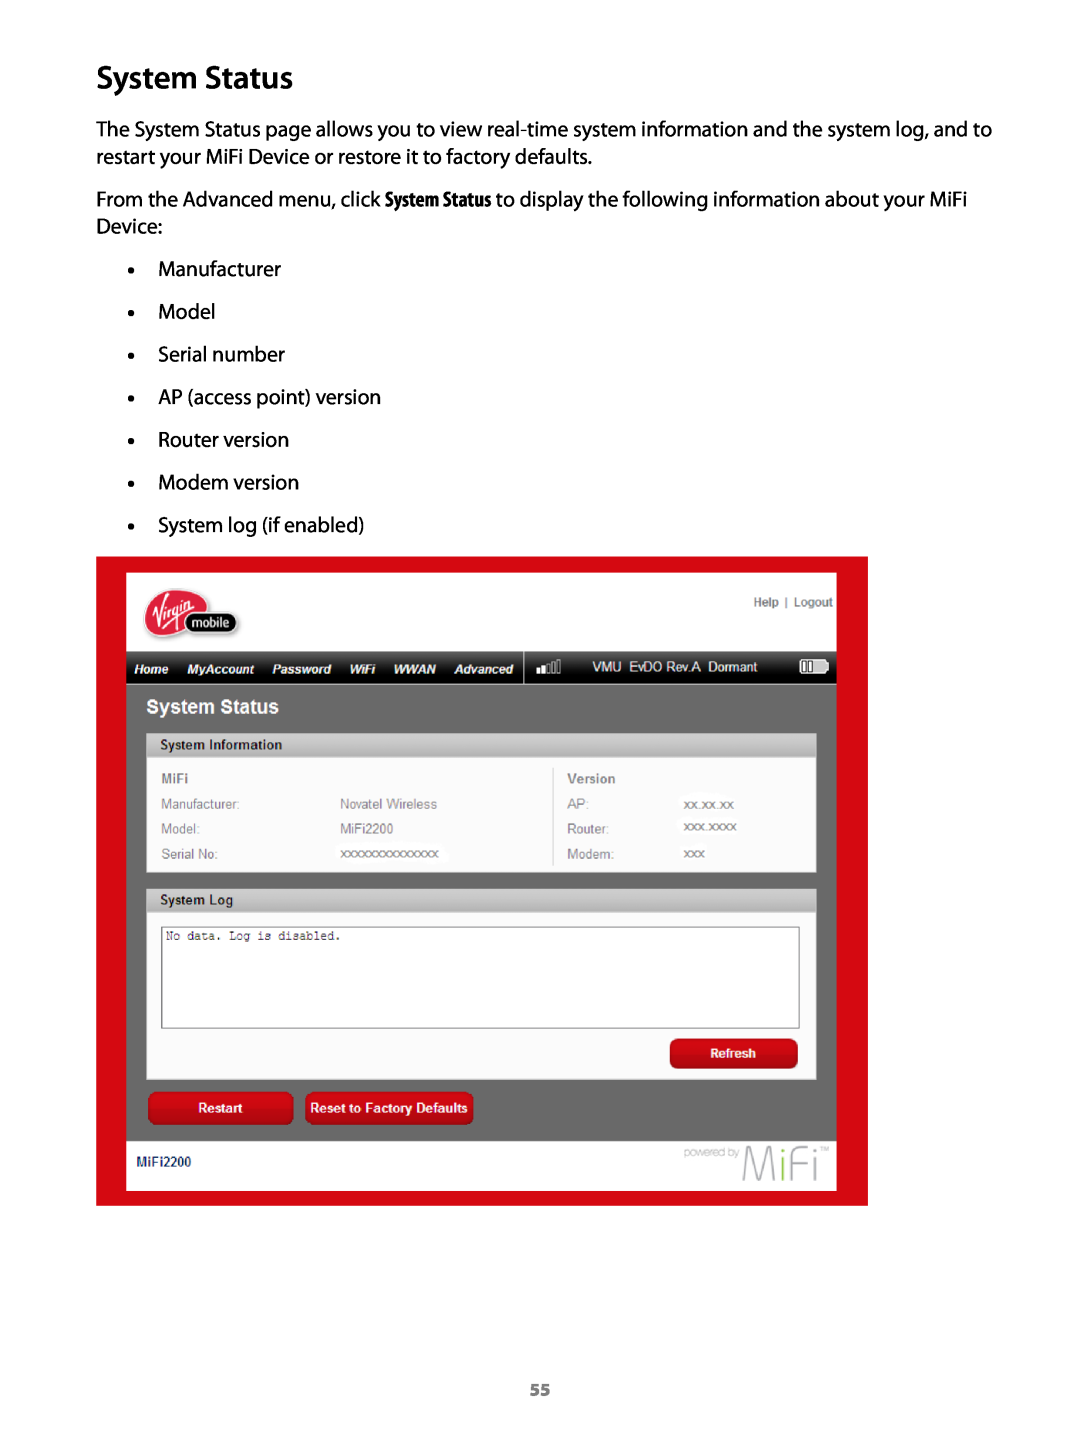 Virgin Mobile 2200 manual System Status, Manufacturer Model Serial number AP access point version 